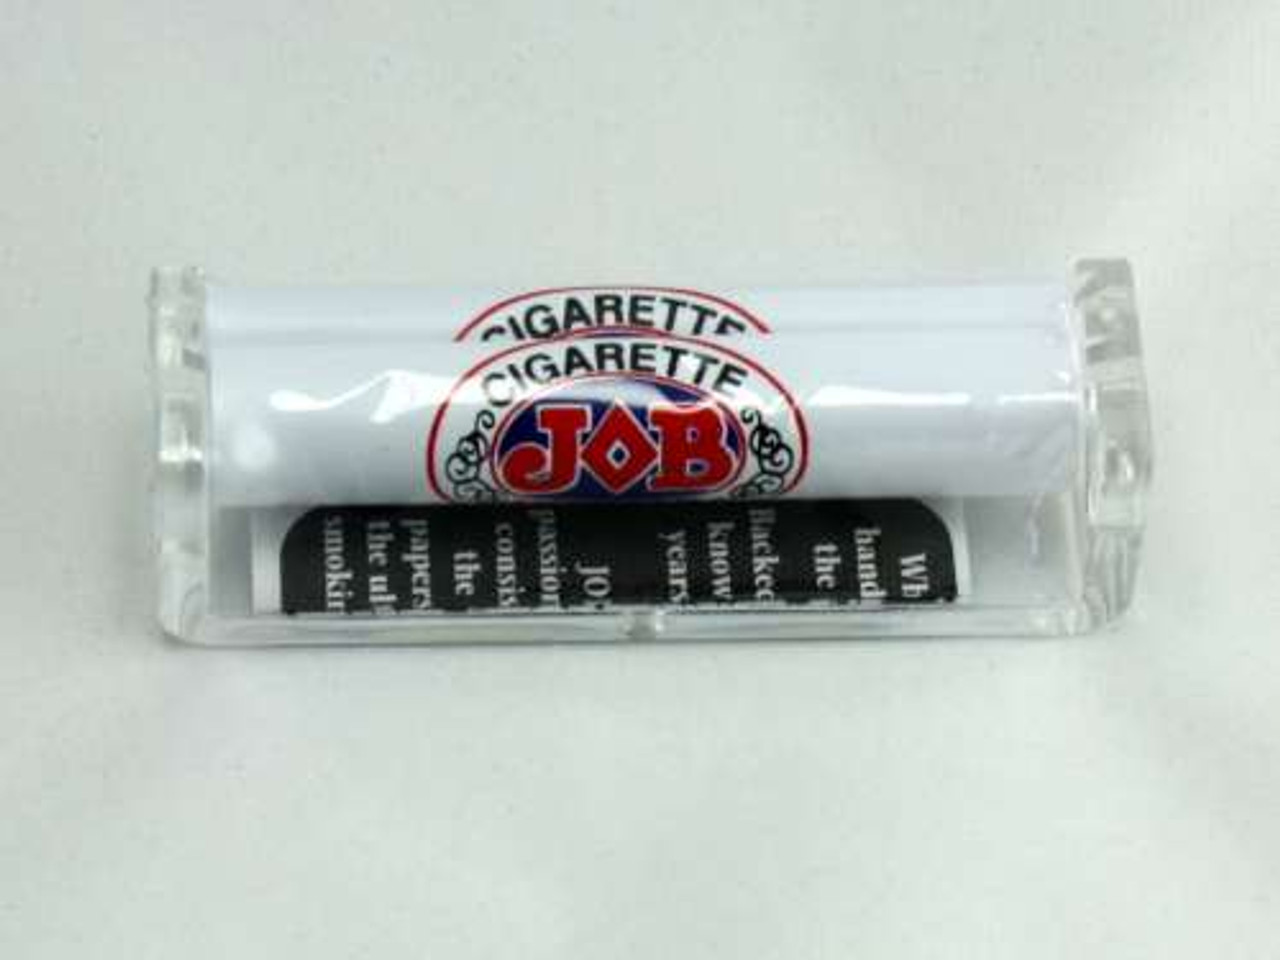 JOB 79mm Cigarette Roller